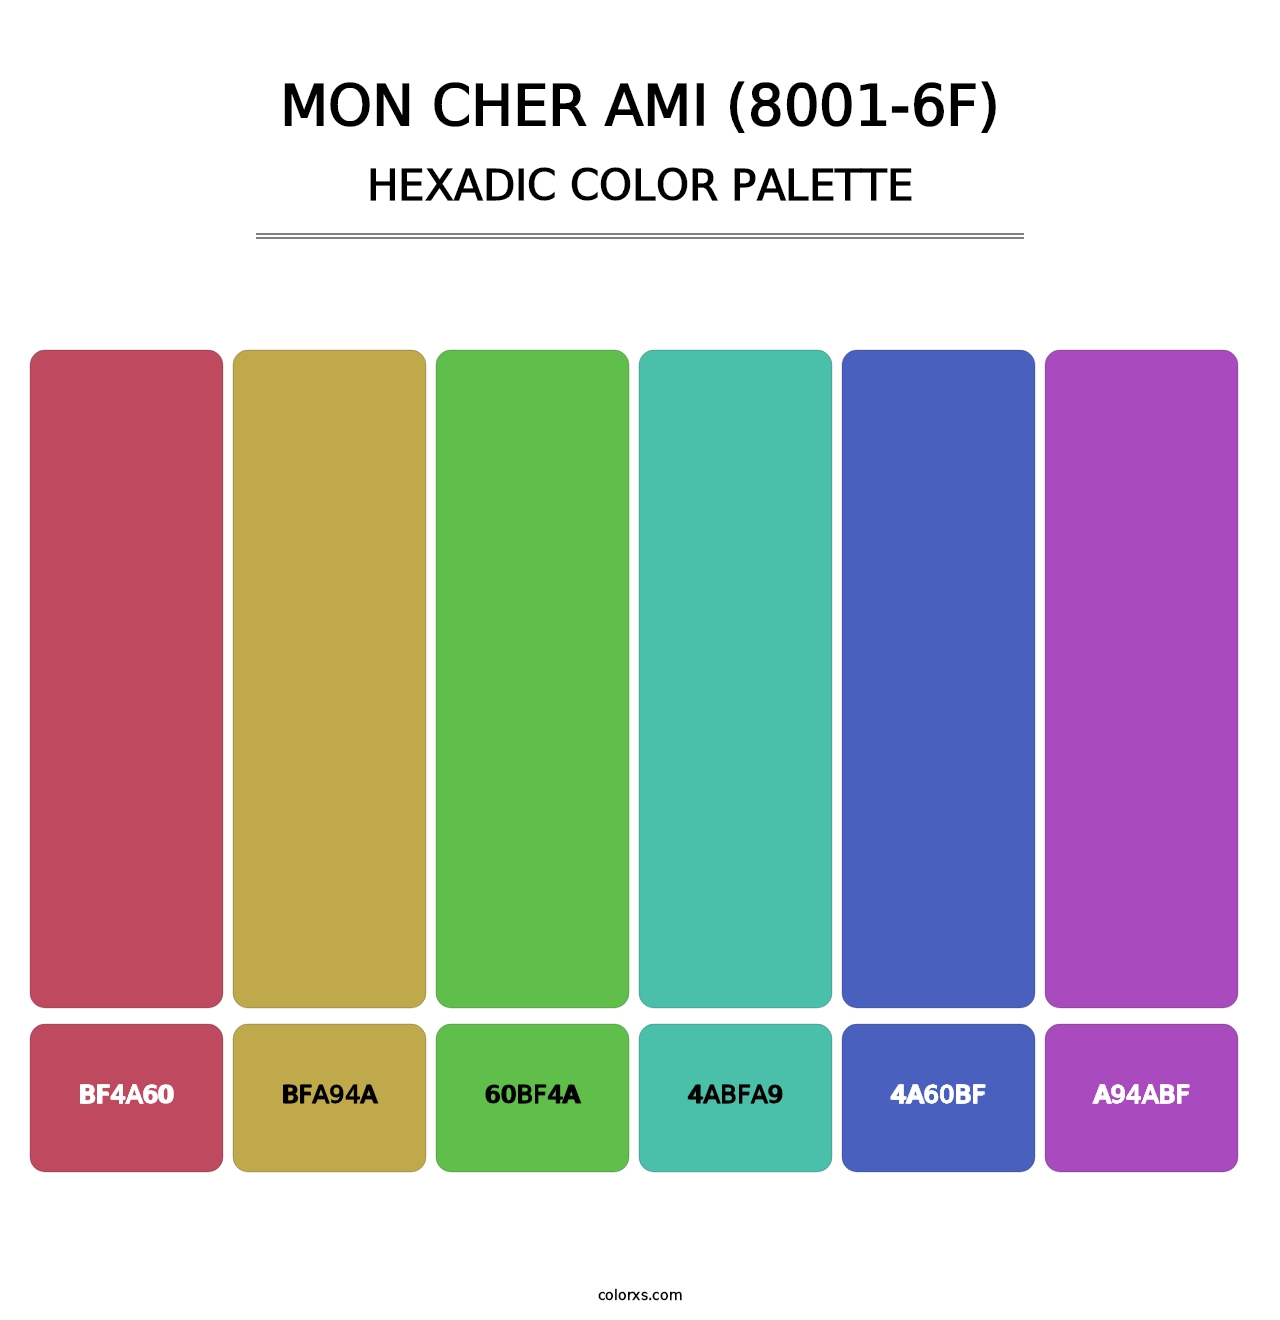 Mon Cher Ami (8001-6F) - Hexadic Color Palette